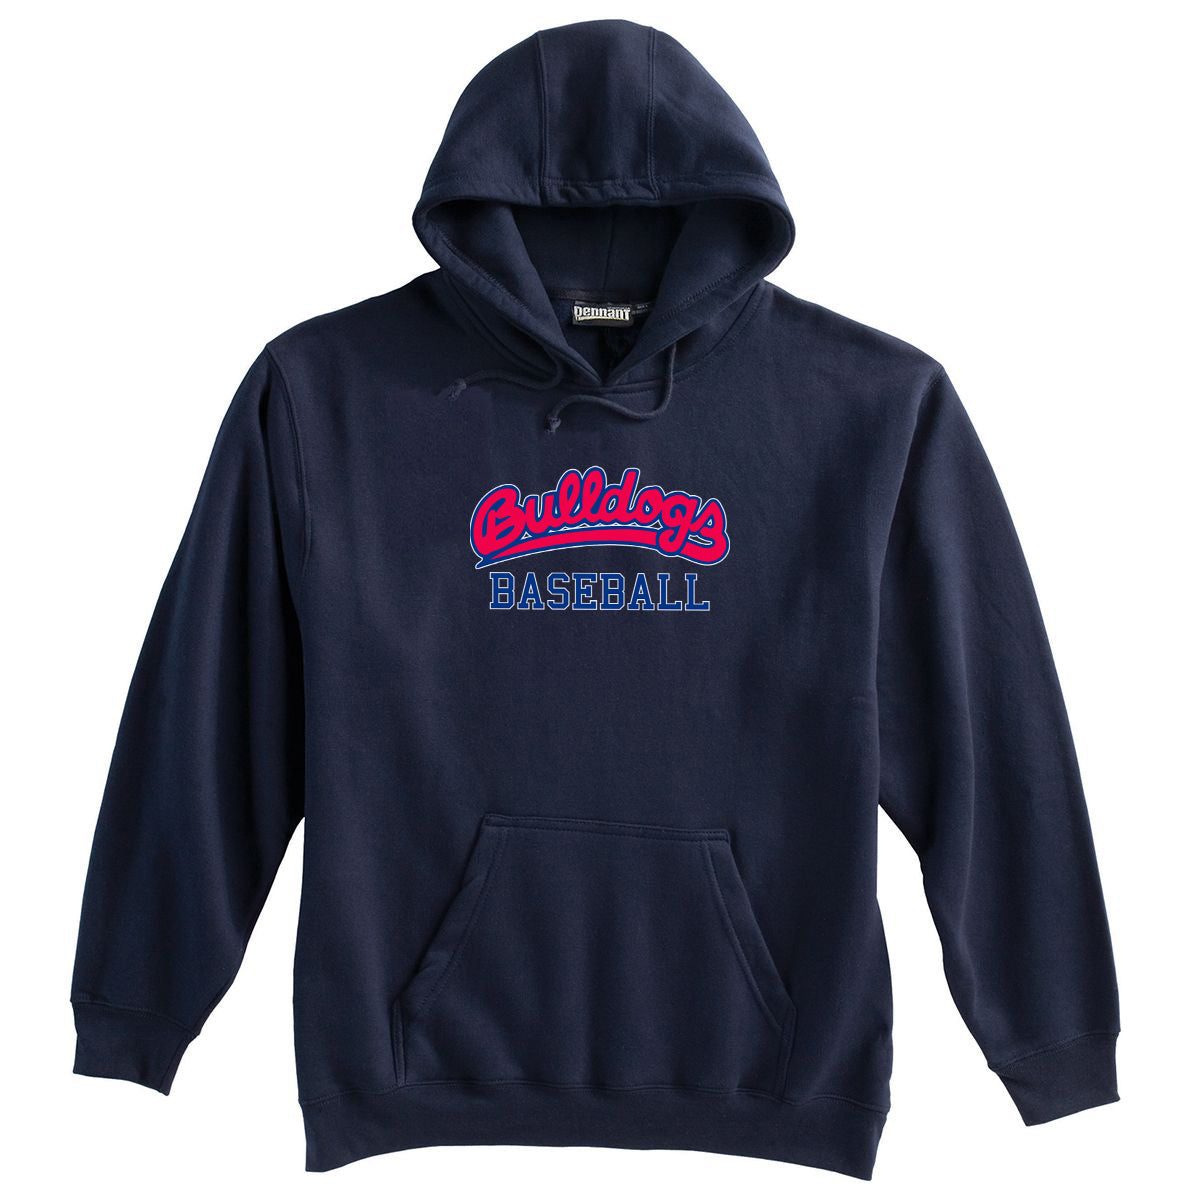 Michigan Bulldogs Baseball Sweatshirt